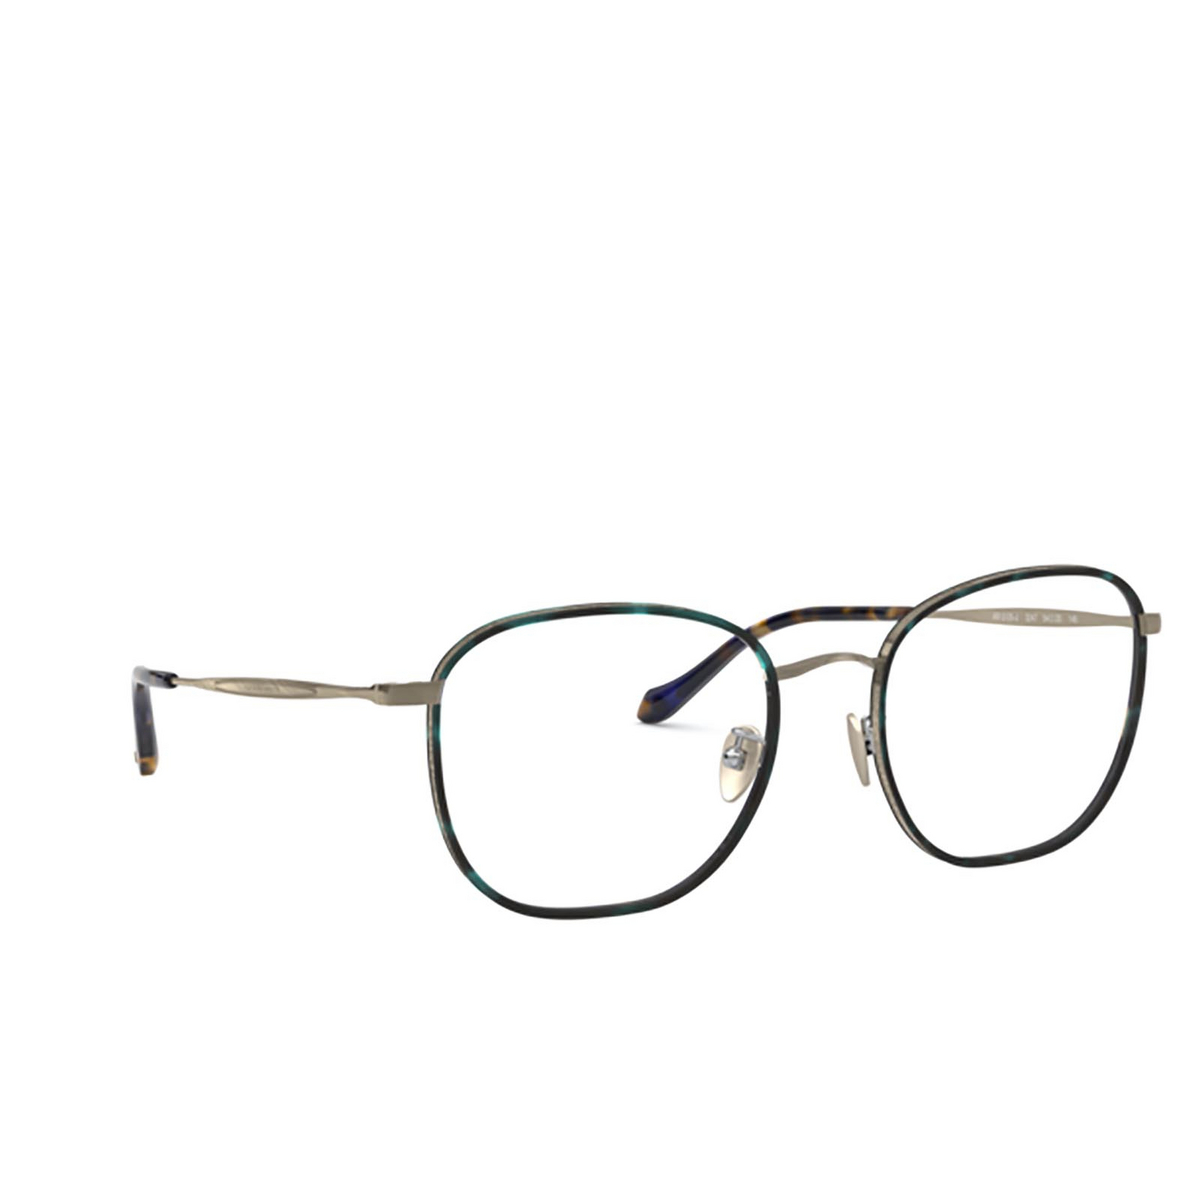 Giorgio Armani® Square Eyeglasses: AR5105J color Blue Havana / Brushed Gold 3247 - three-quarters view.